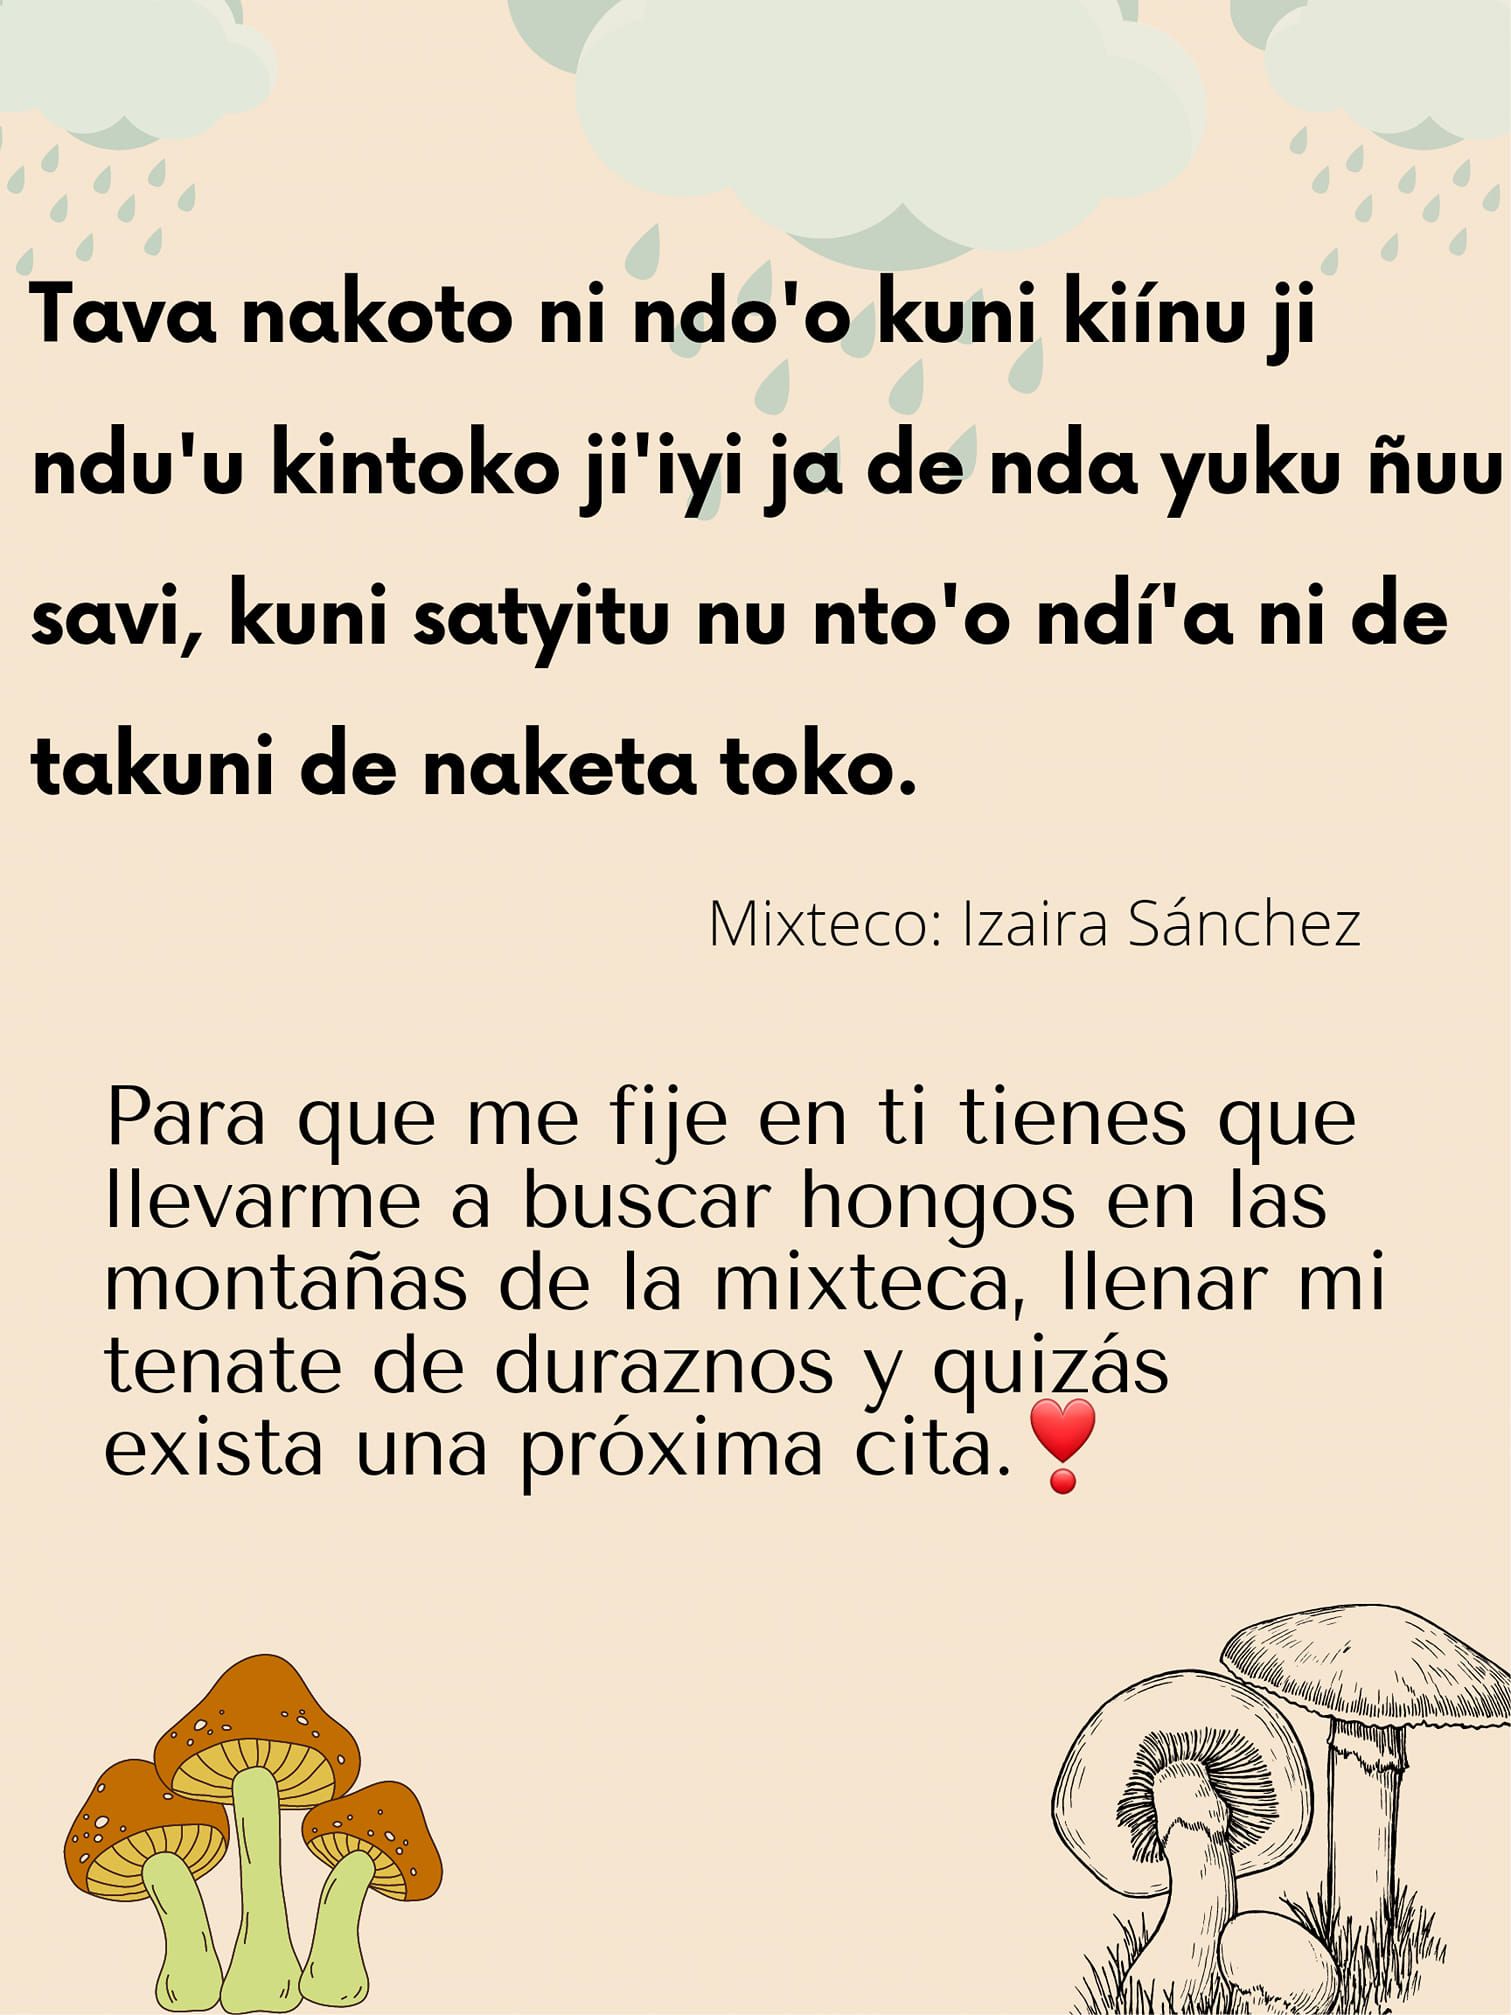 Poem in Mixtec by Izaira López Sánchez, translated underneath in Spanish

Poema en mixteco por Izaira López Sánchez